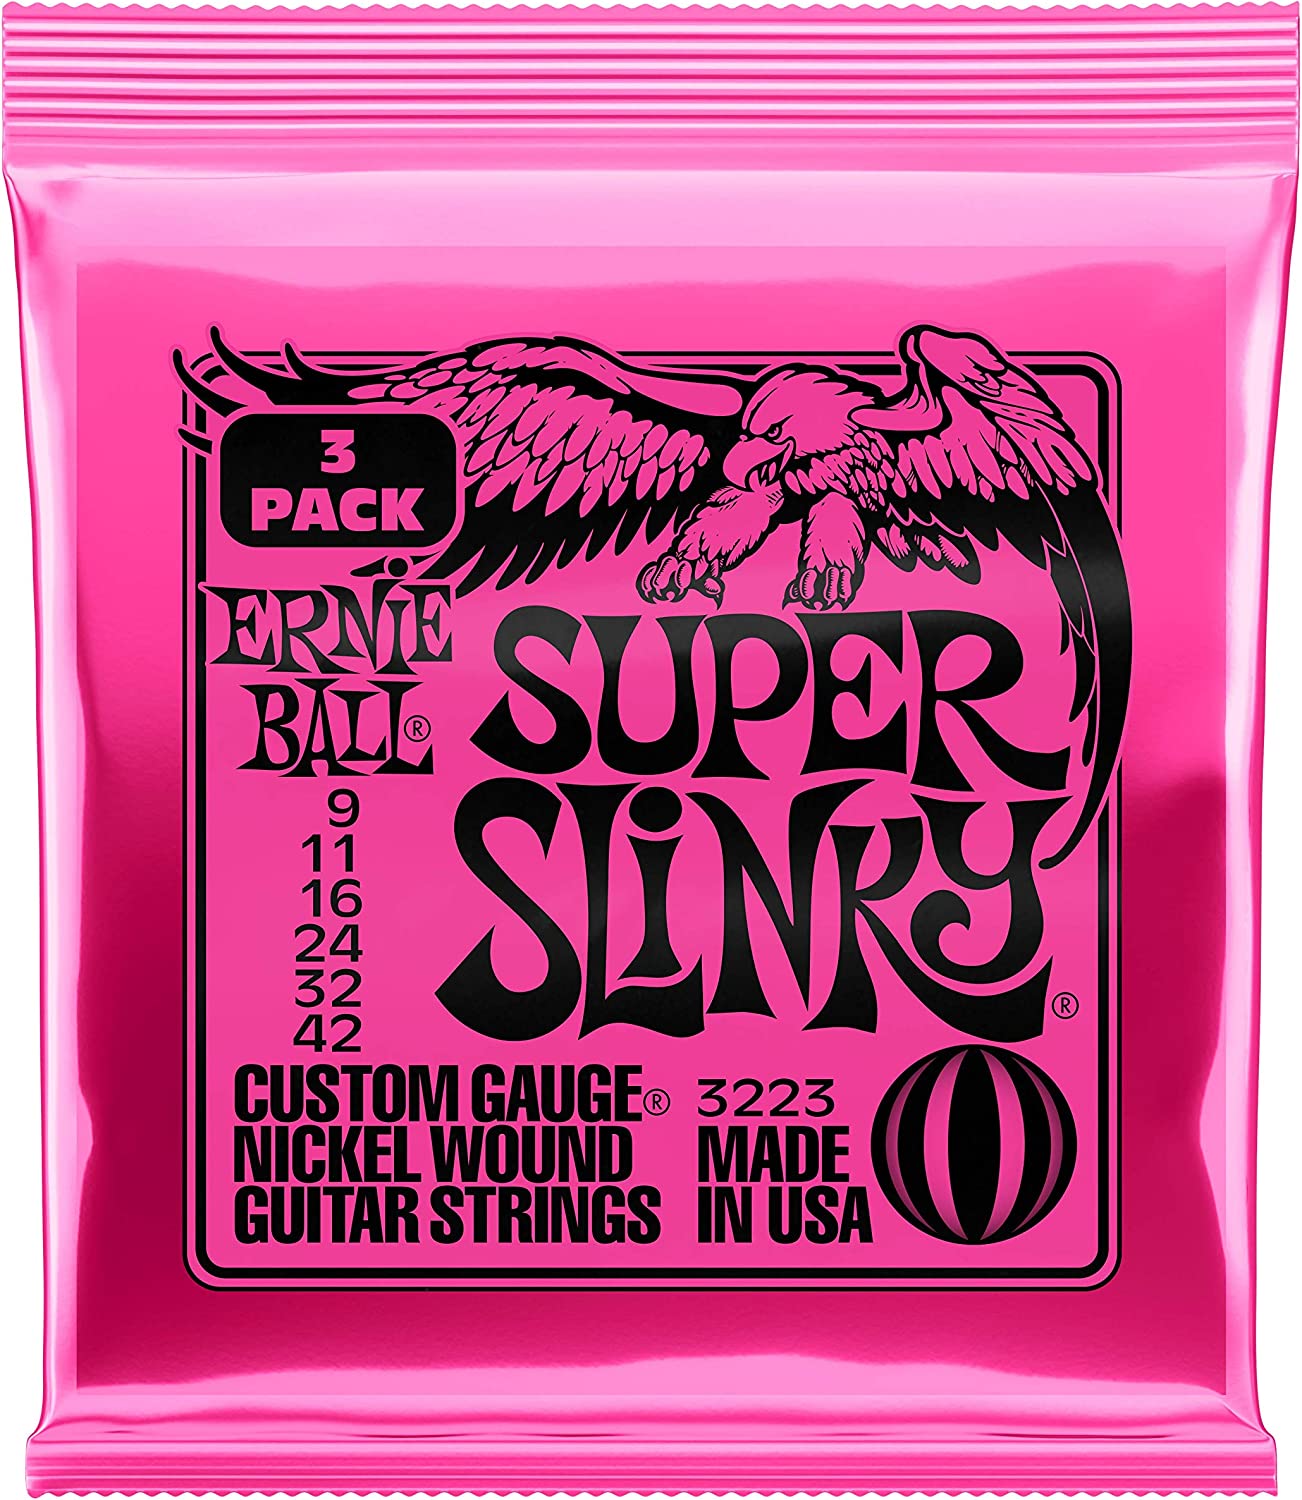 Ernie Ball Slinky Electric Guitar Strings 3 - Pack